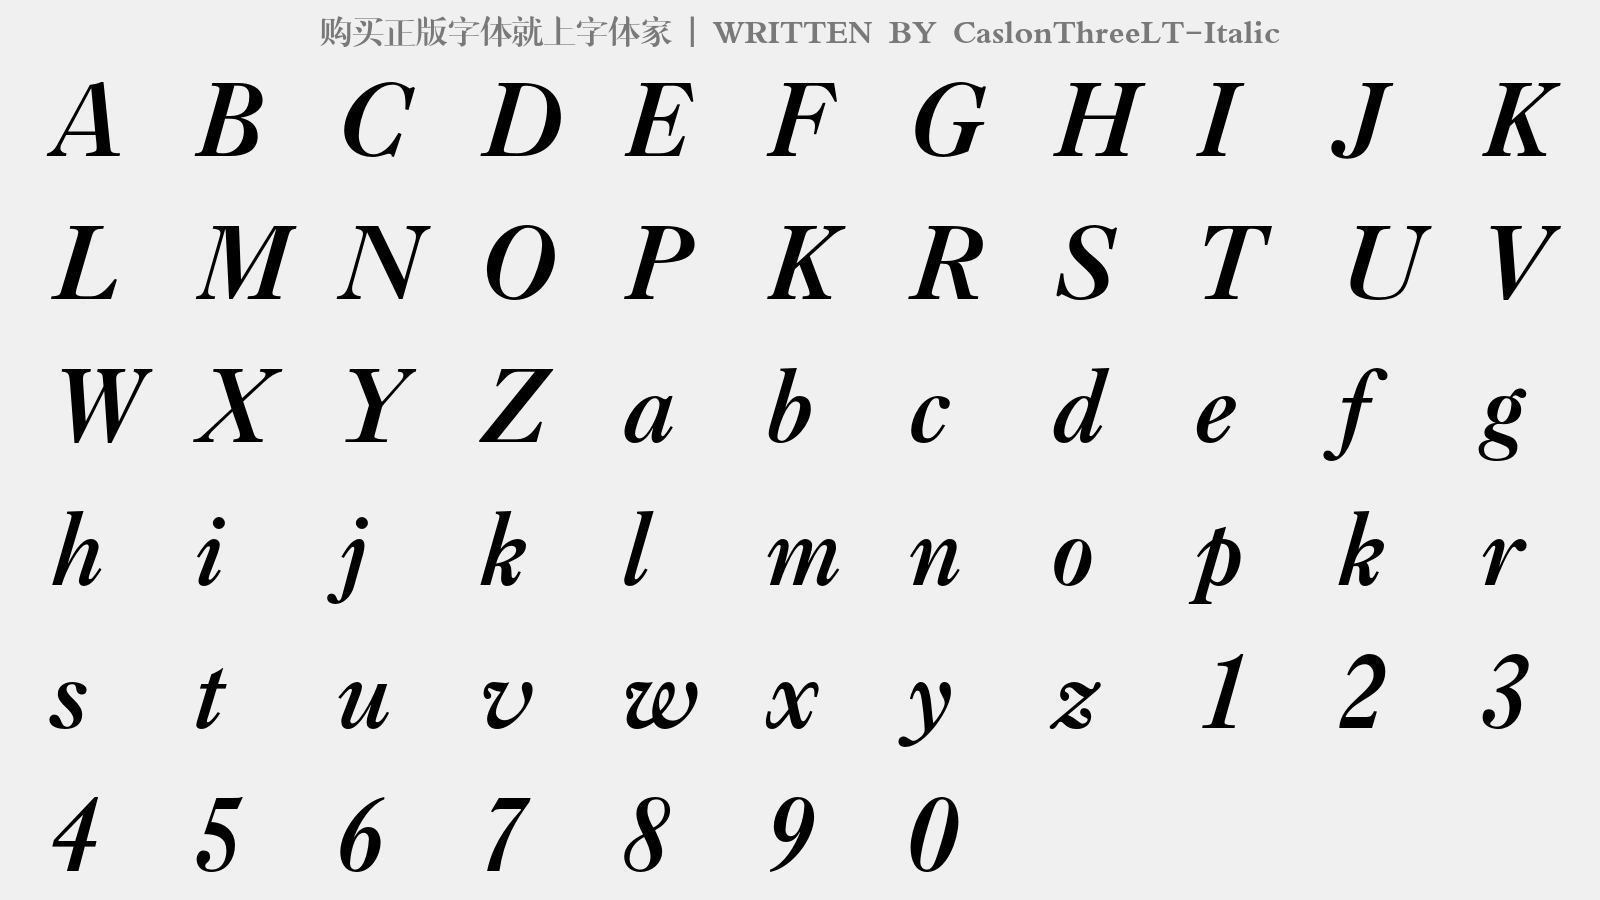 CaslonThreeLT-Italic - 大写字母/小写字母/数字